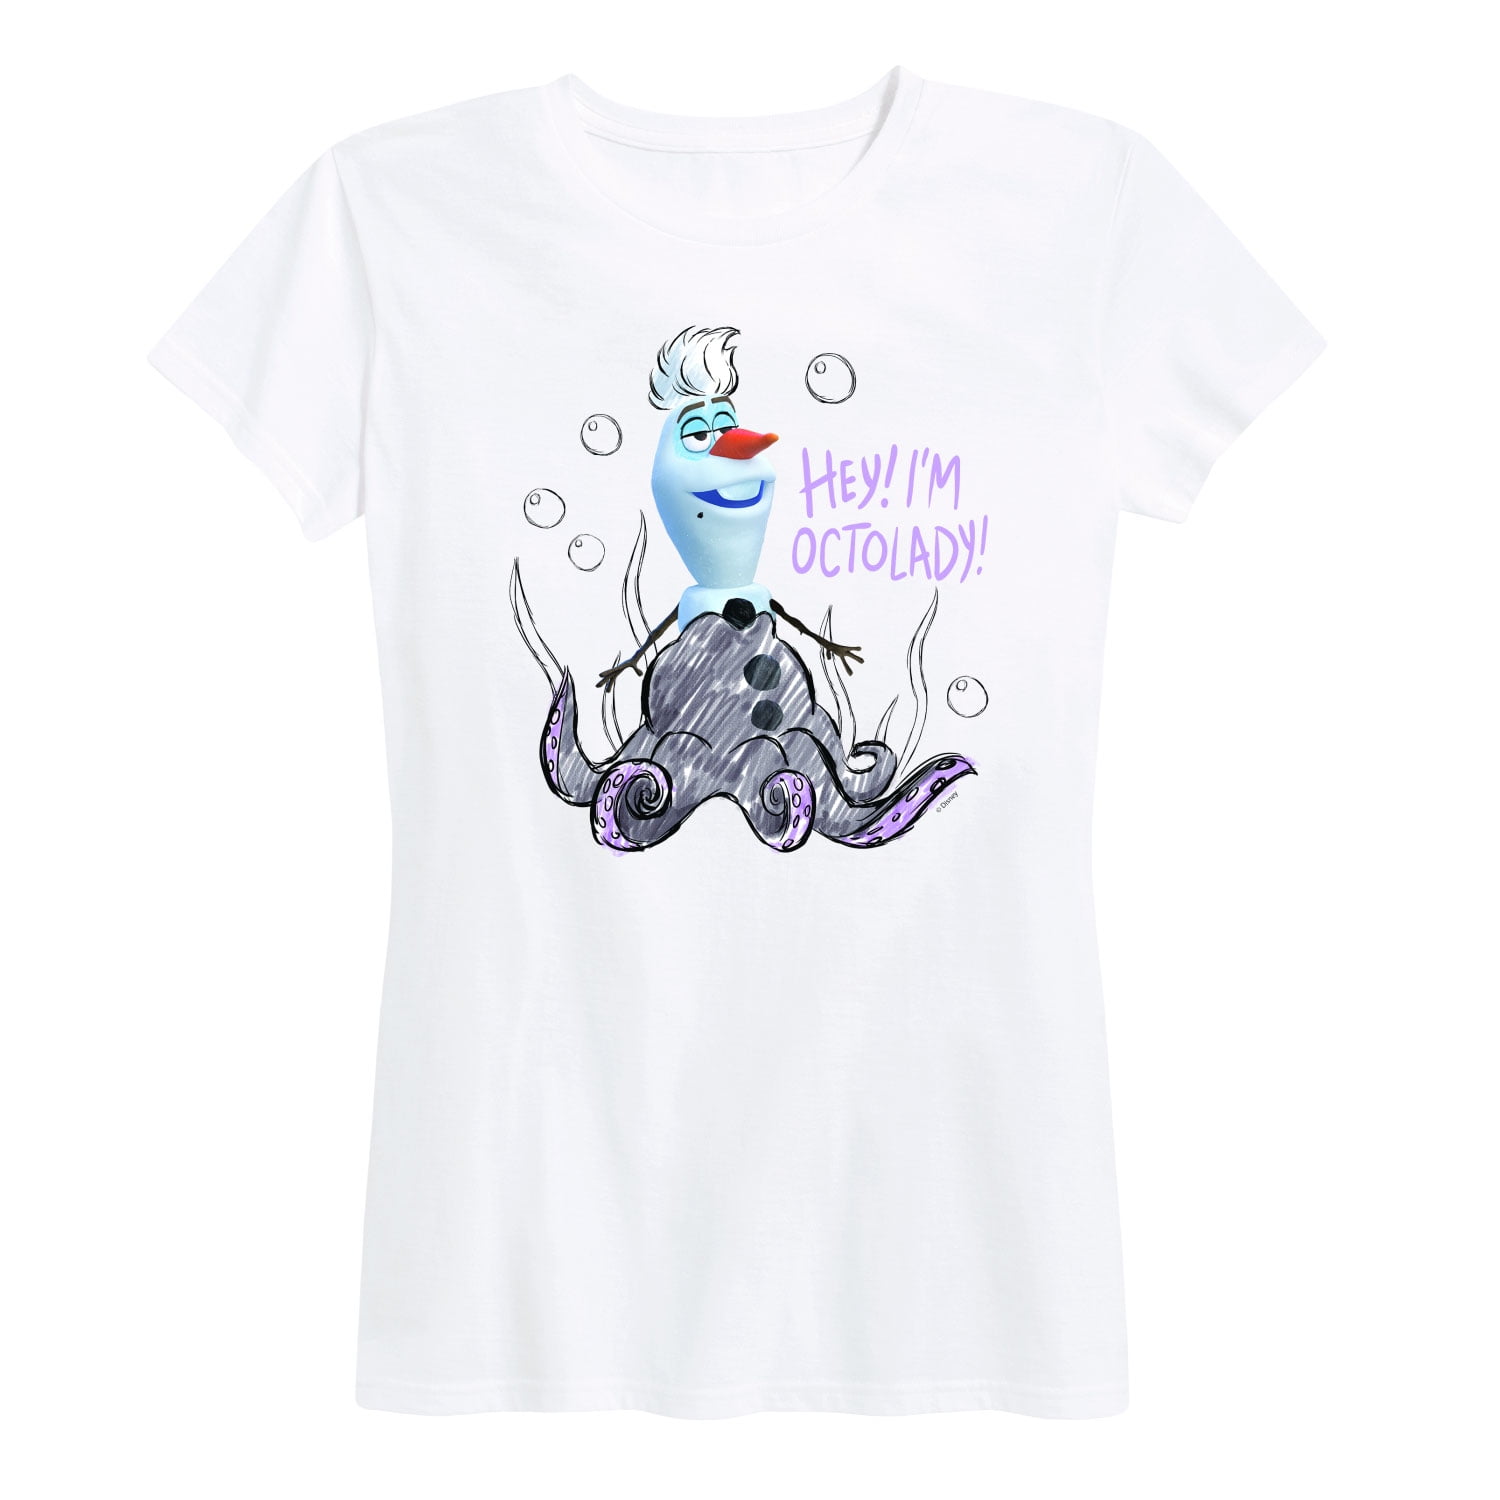 Frozen - Olaf Presents - Olaf Ursula - Women's Short Sleeve Graphic T-Shirt